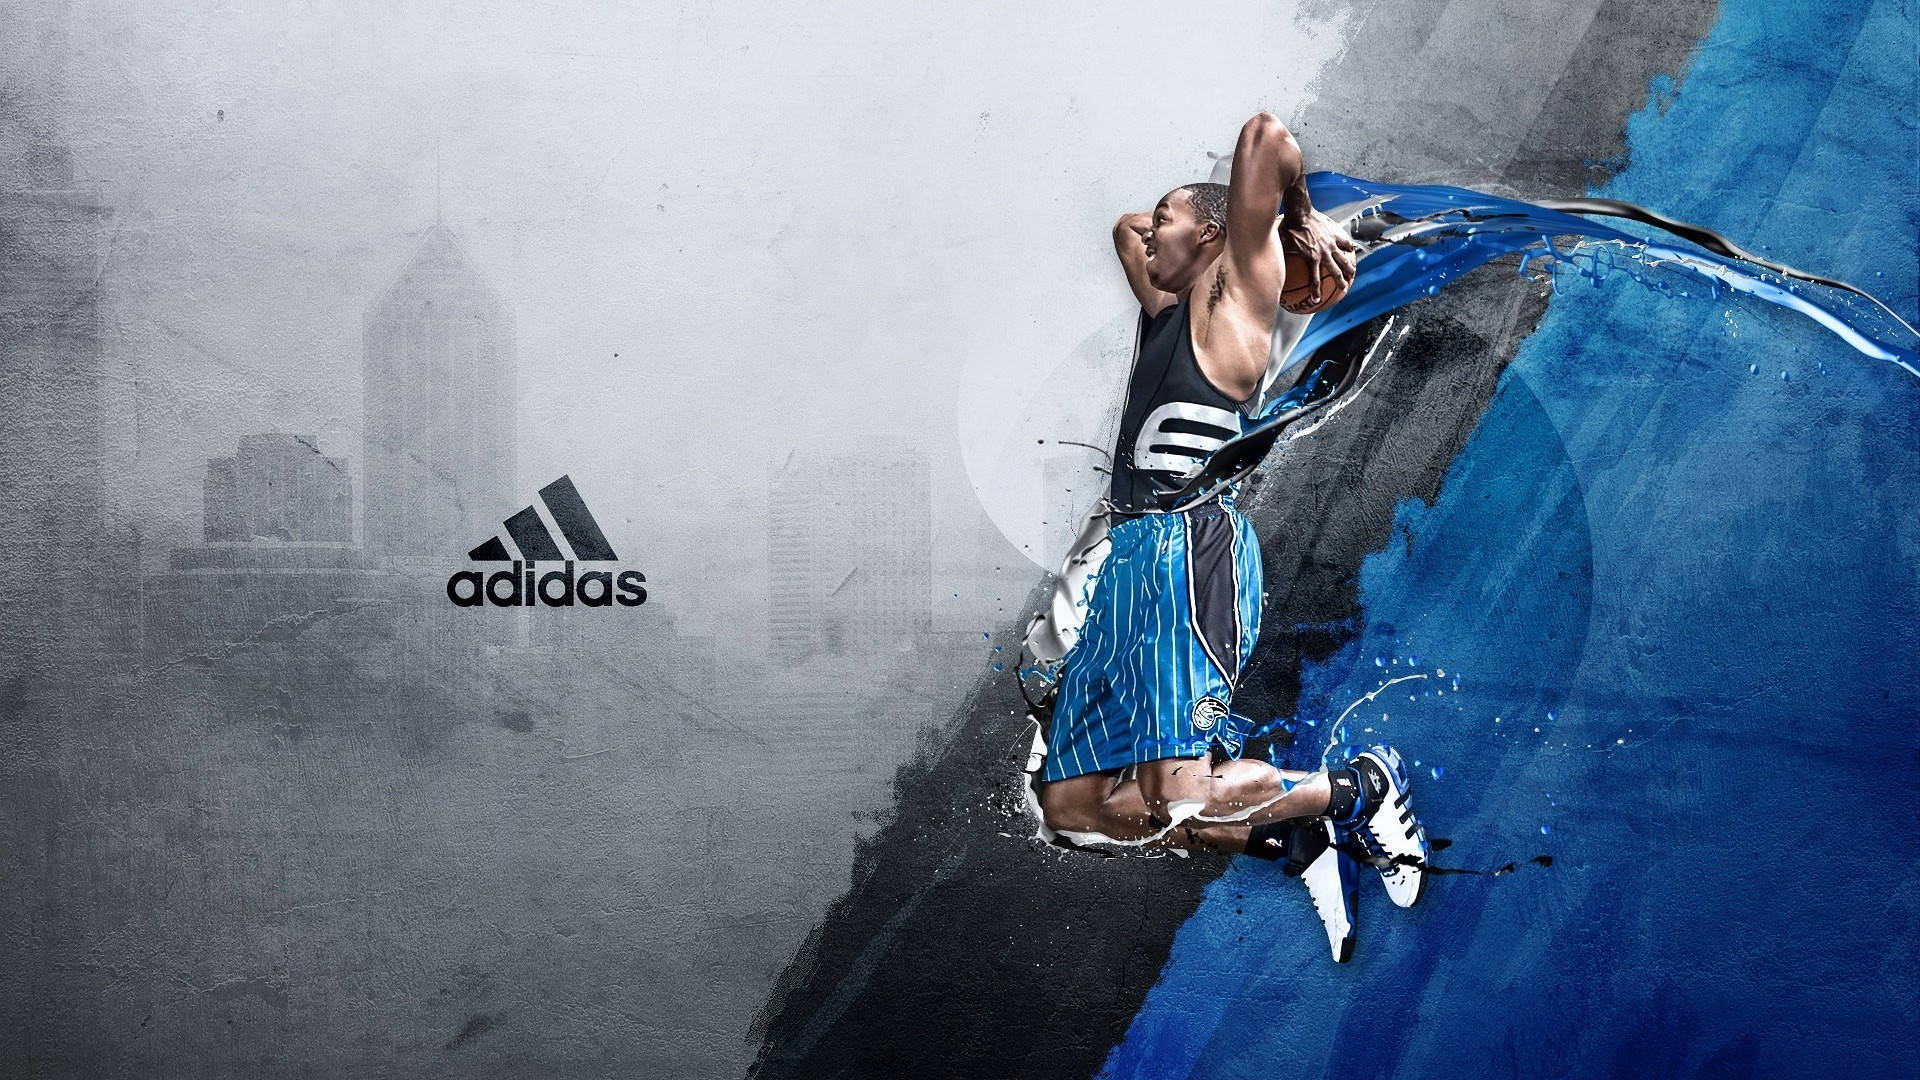 Download Adidas Shoes Hd Sports Wallpaper 